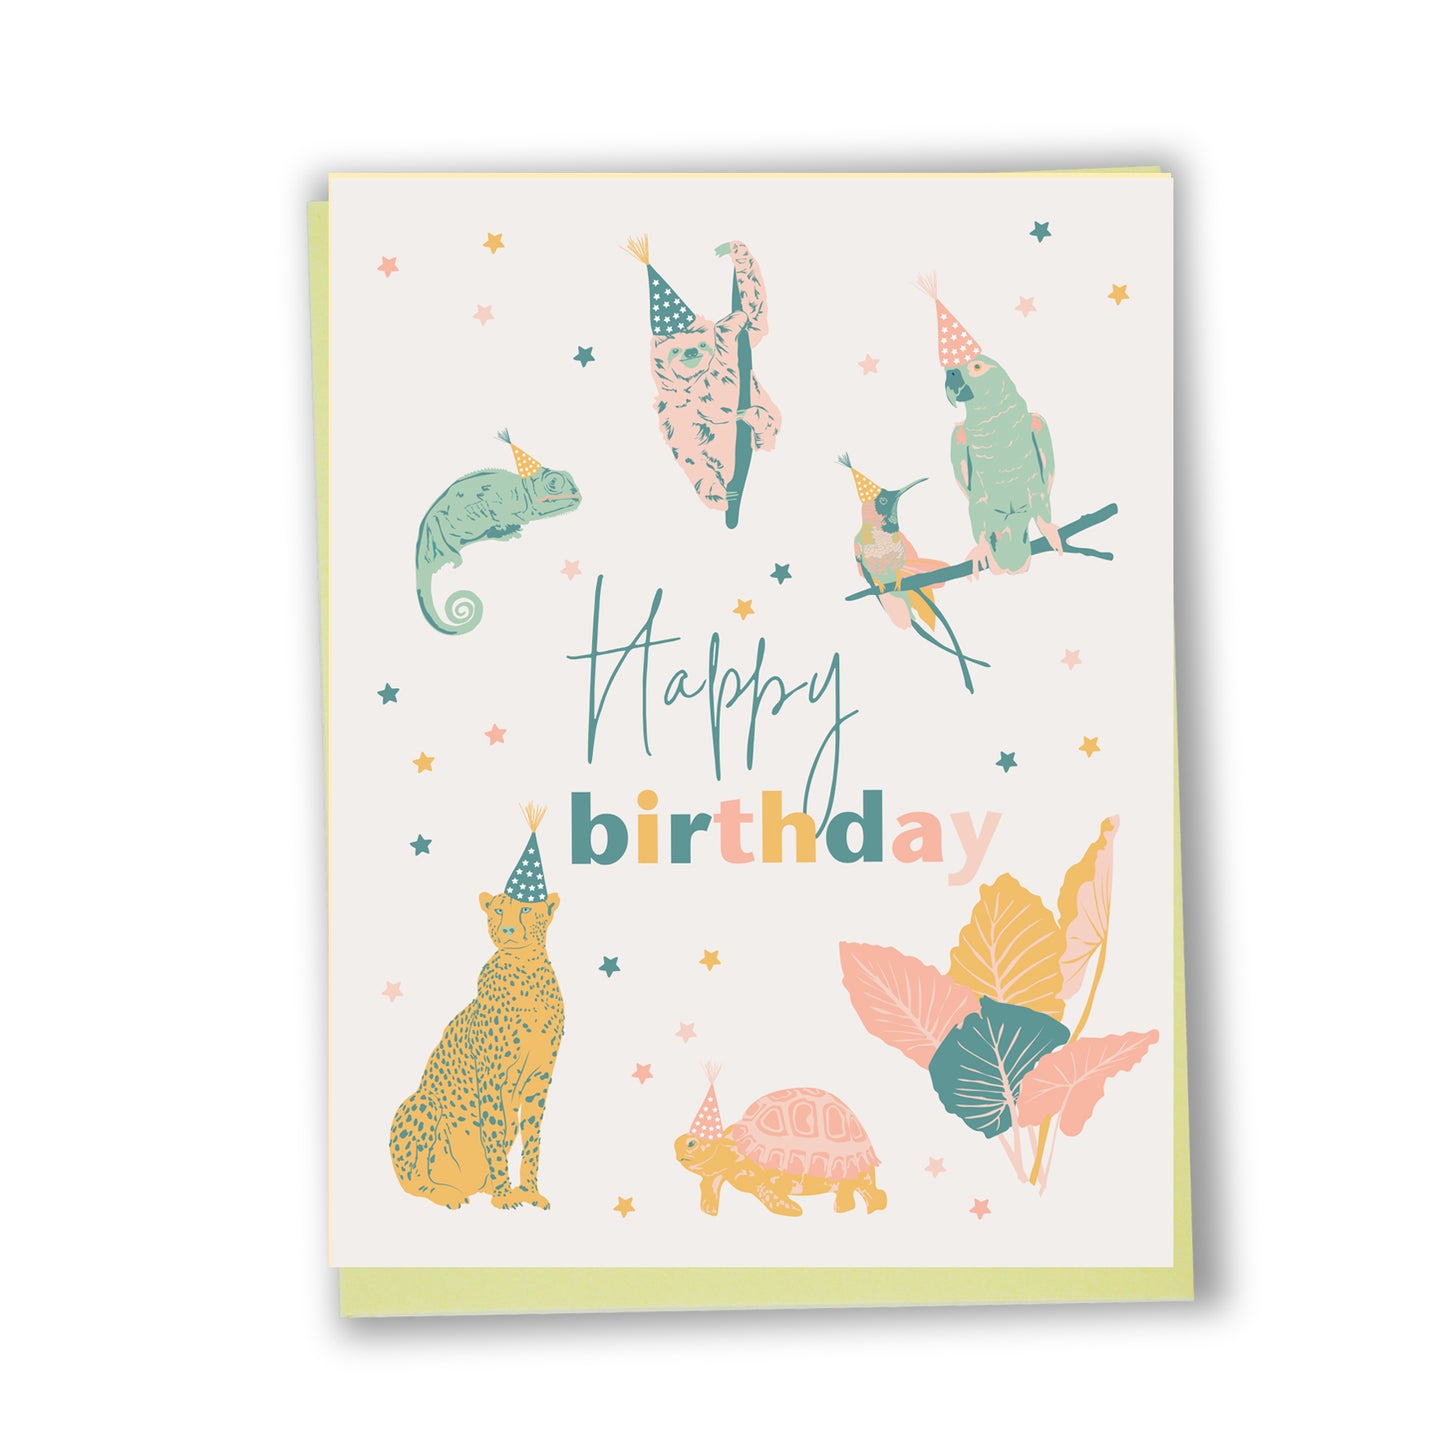 Happy birthday - wild animals